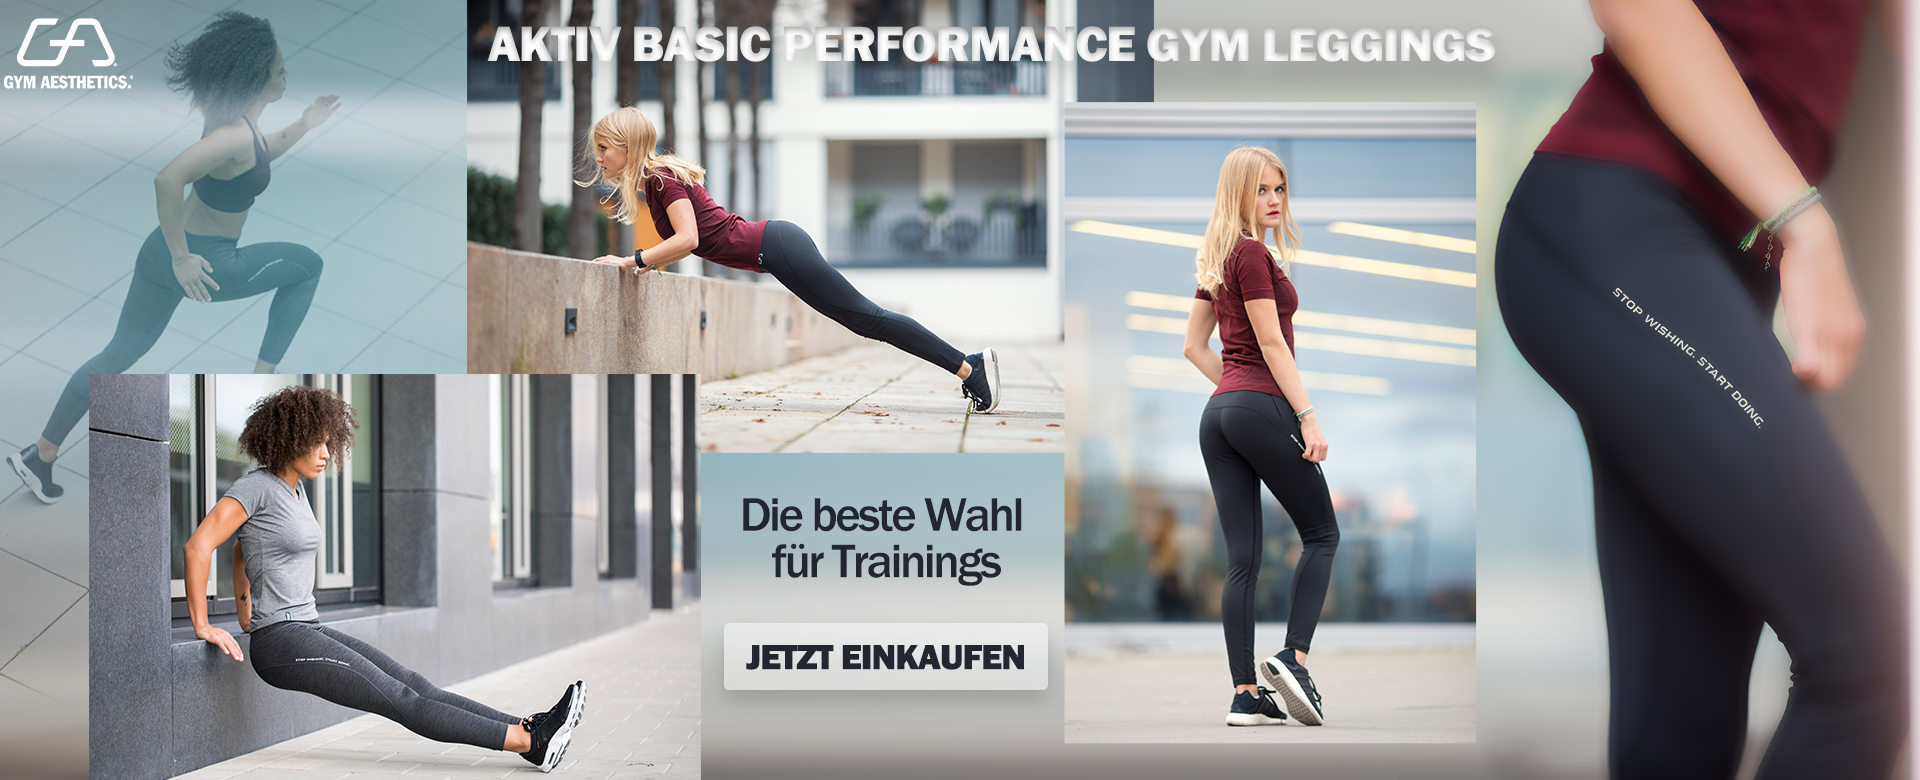 Aktiv Basic Performance Gym Leggings für Damen in Schwarz | Gym Aesthetics